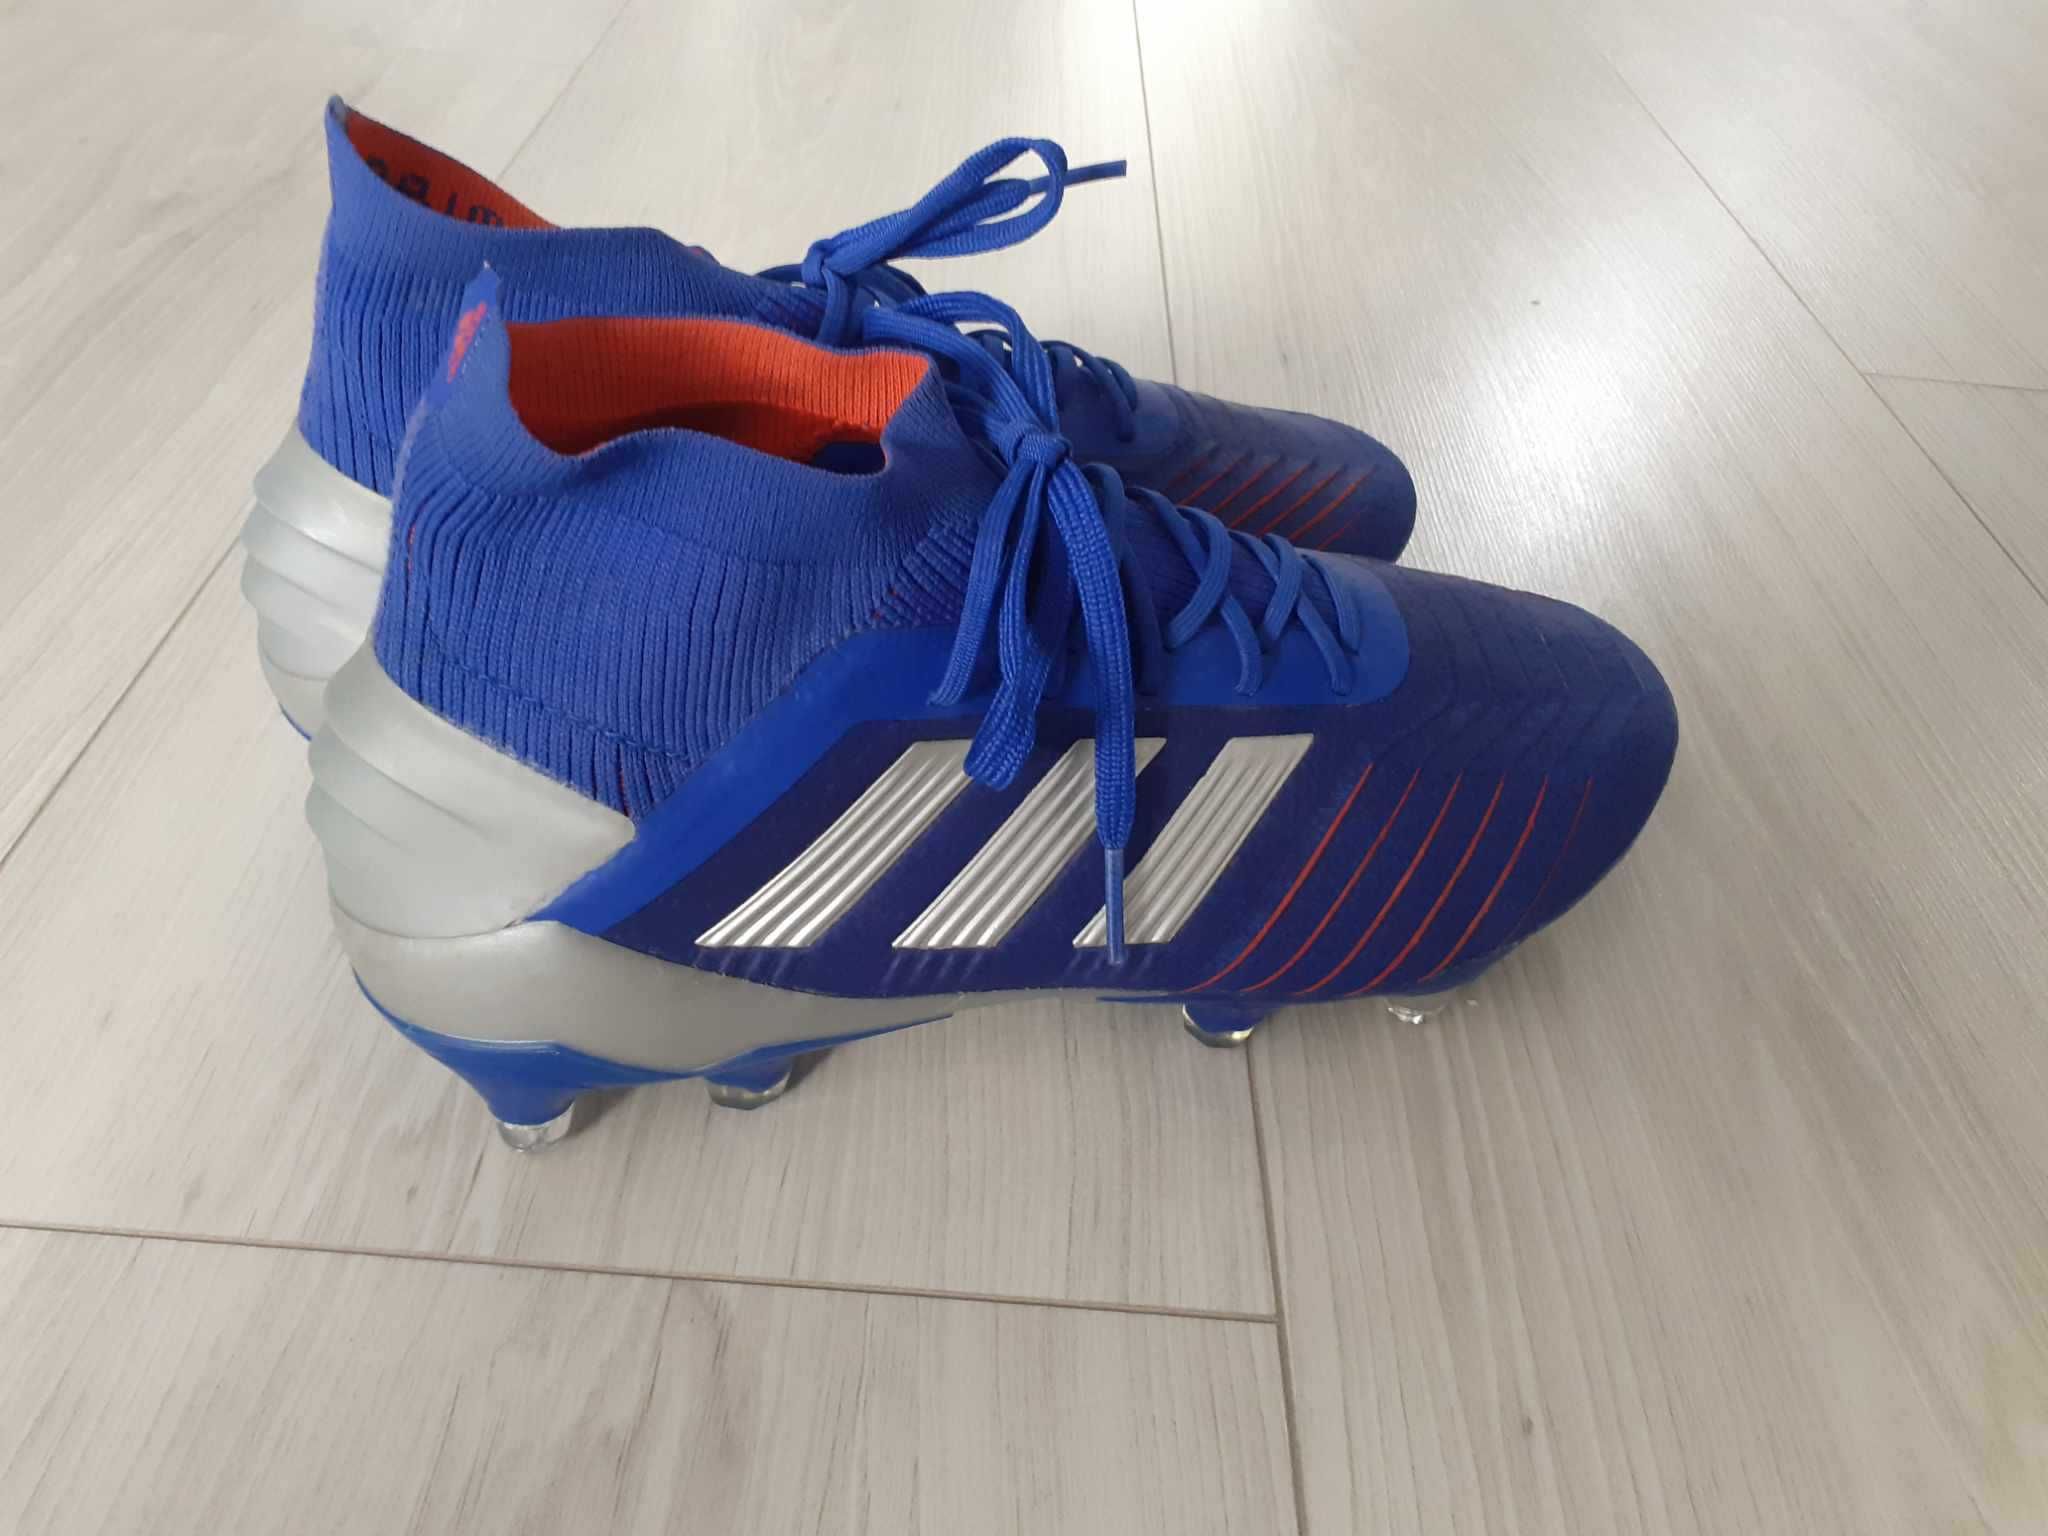 Profesjonalne buty piłkarskie korki adidas Predator 19.1 r. 40 2/3.